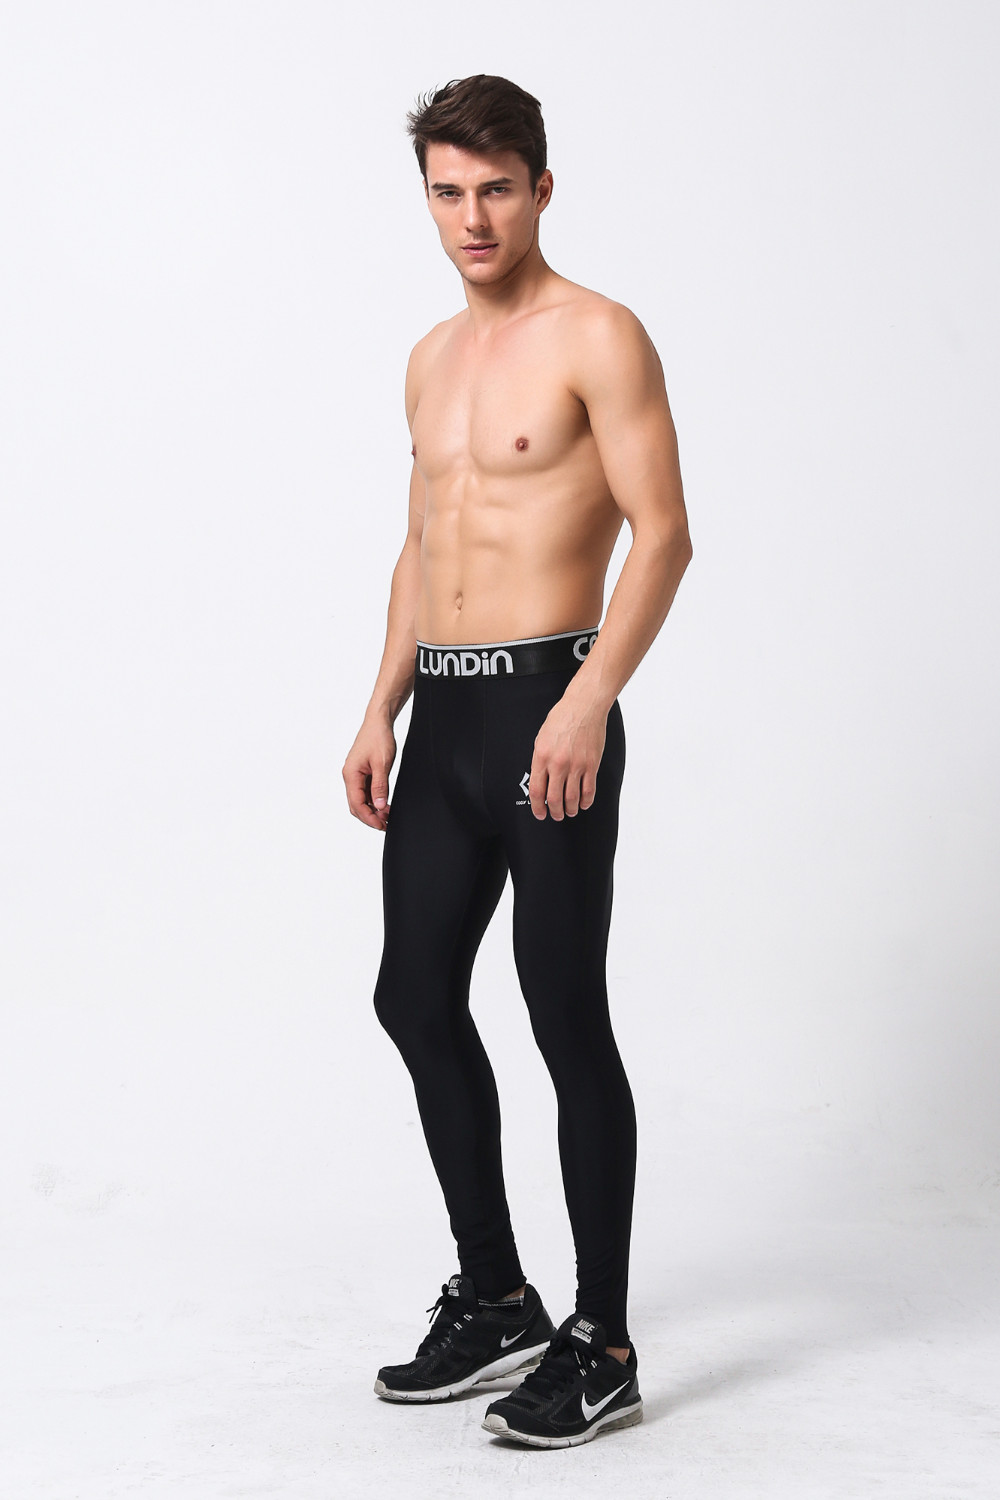 Fashion-Men-running-Soccer-Training-Long-Pants-Fitness-Men-compression-tights-gym-bodybuilding-running-fitness-jogging.jpg